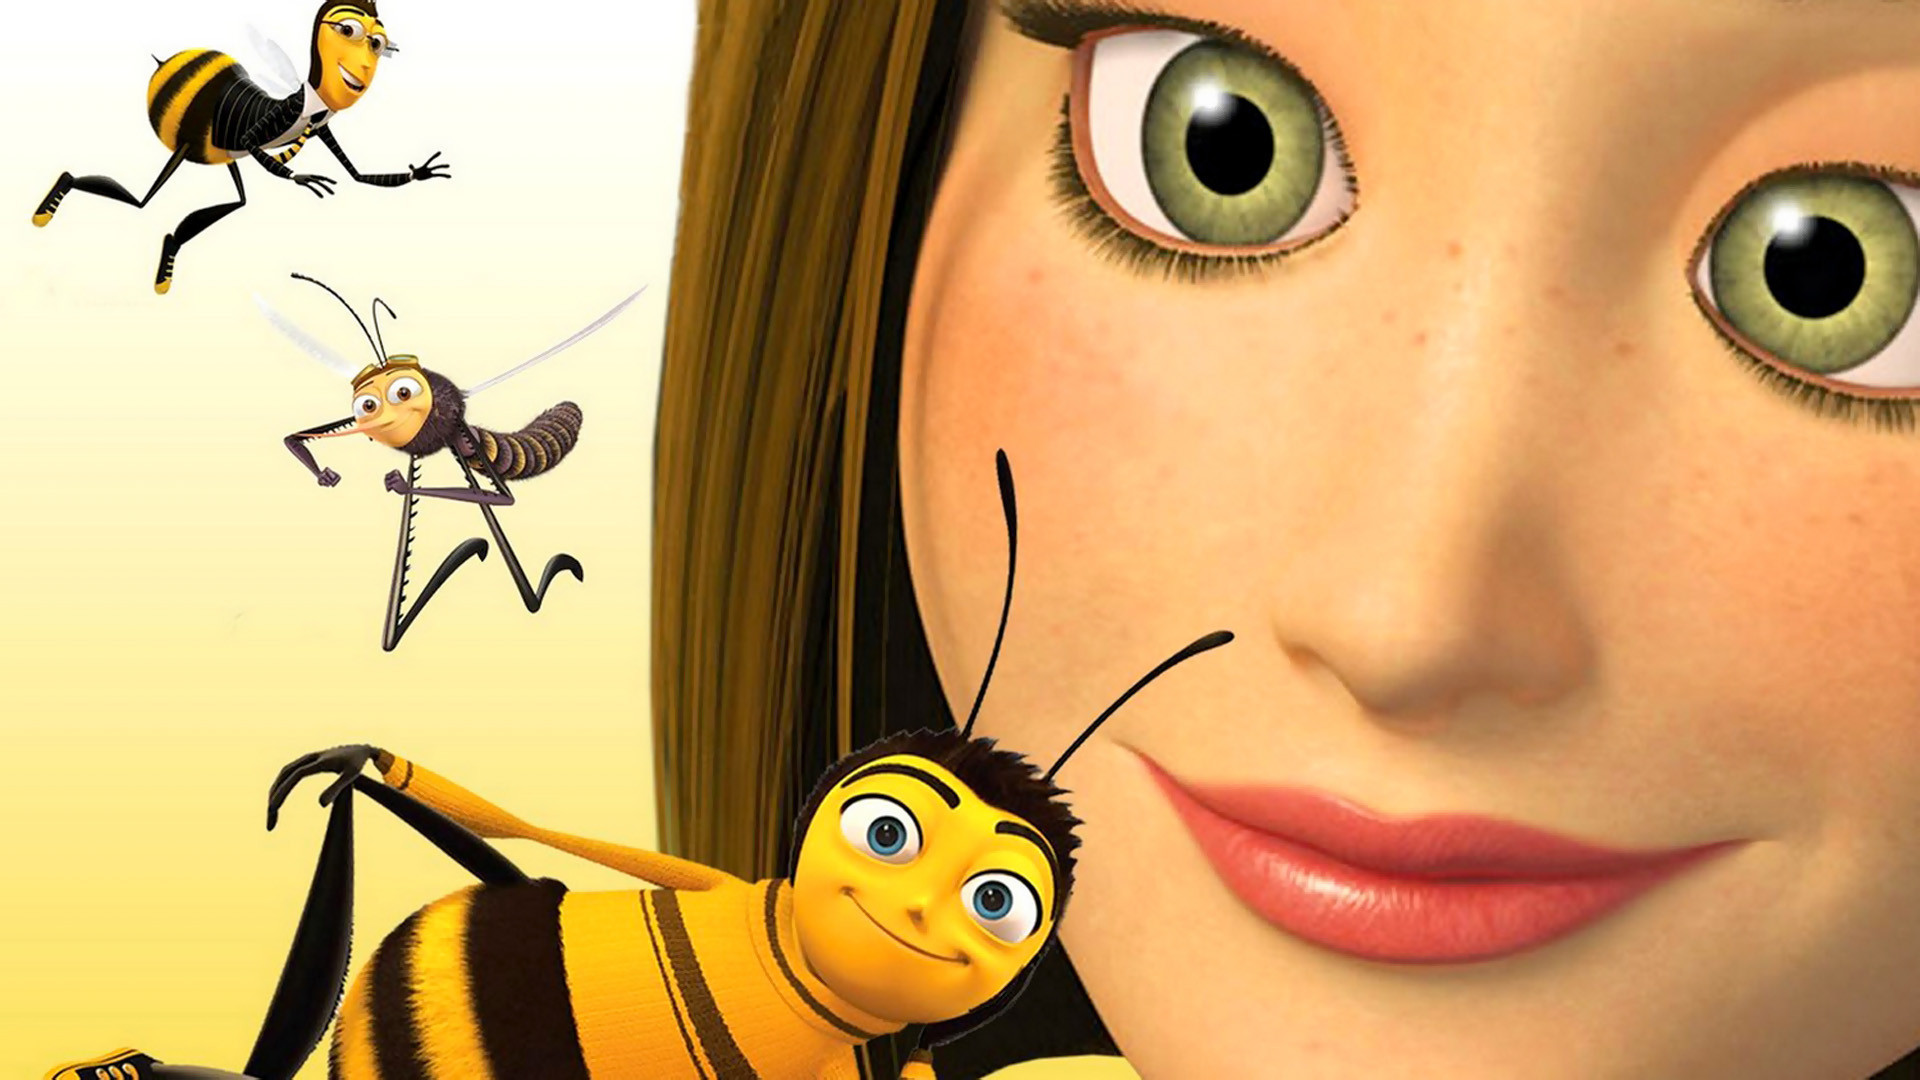 HD wallpaper movie, bee movie